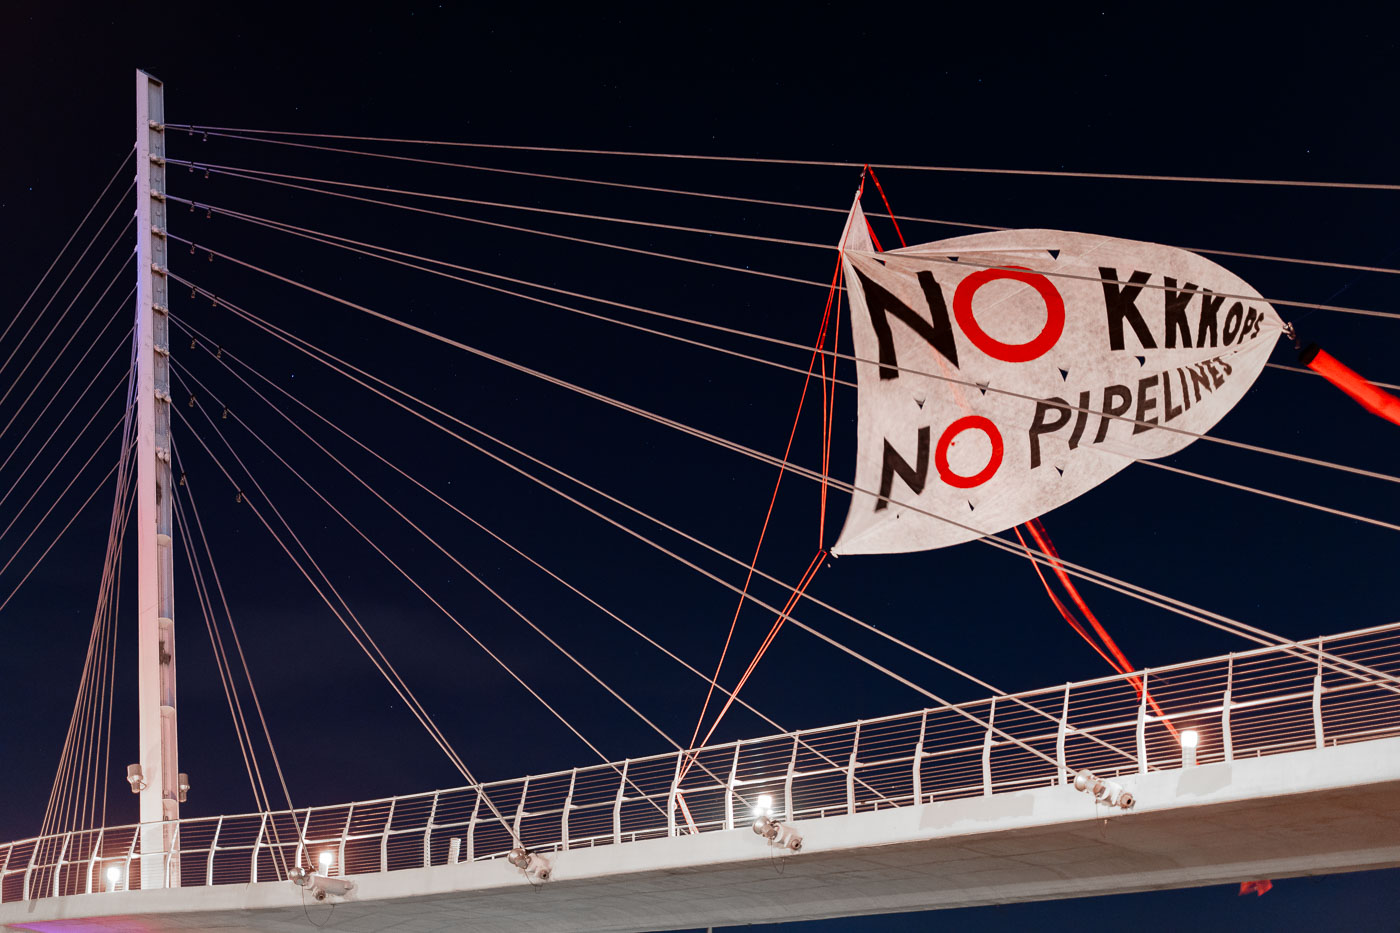 No KKKops No Pipelines banner